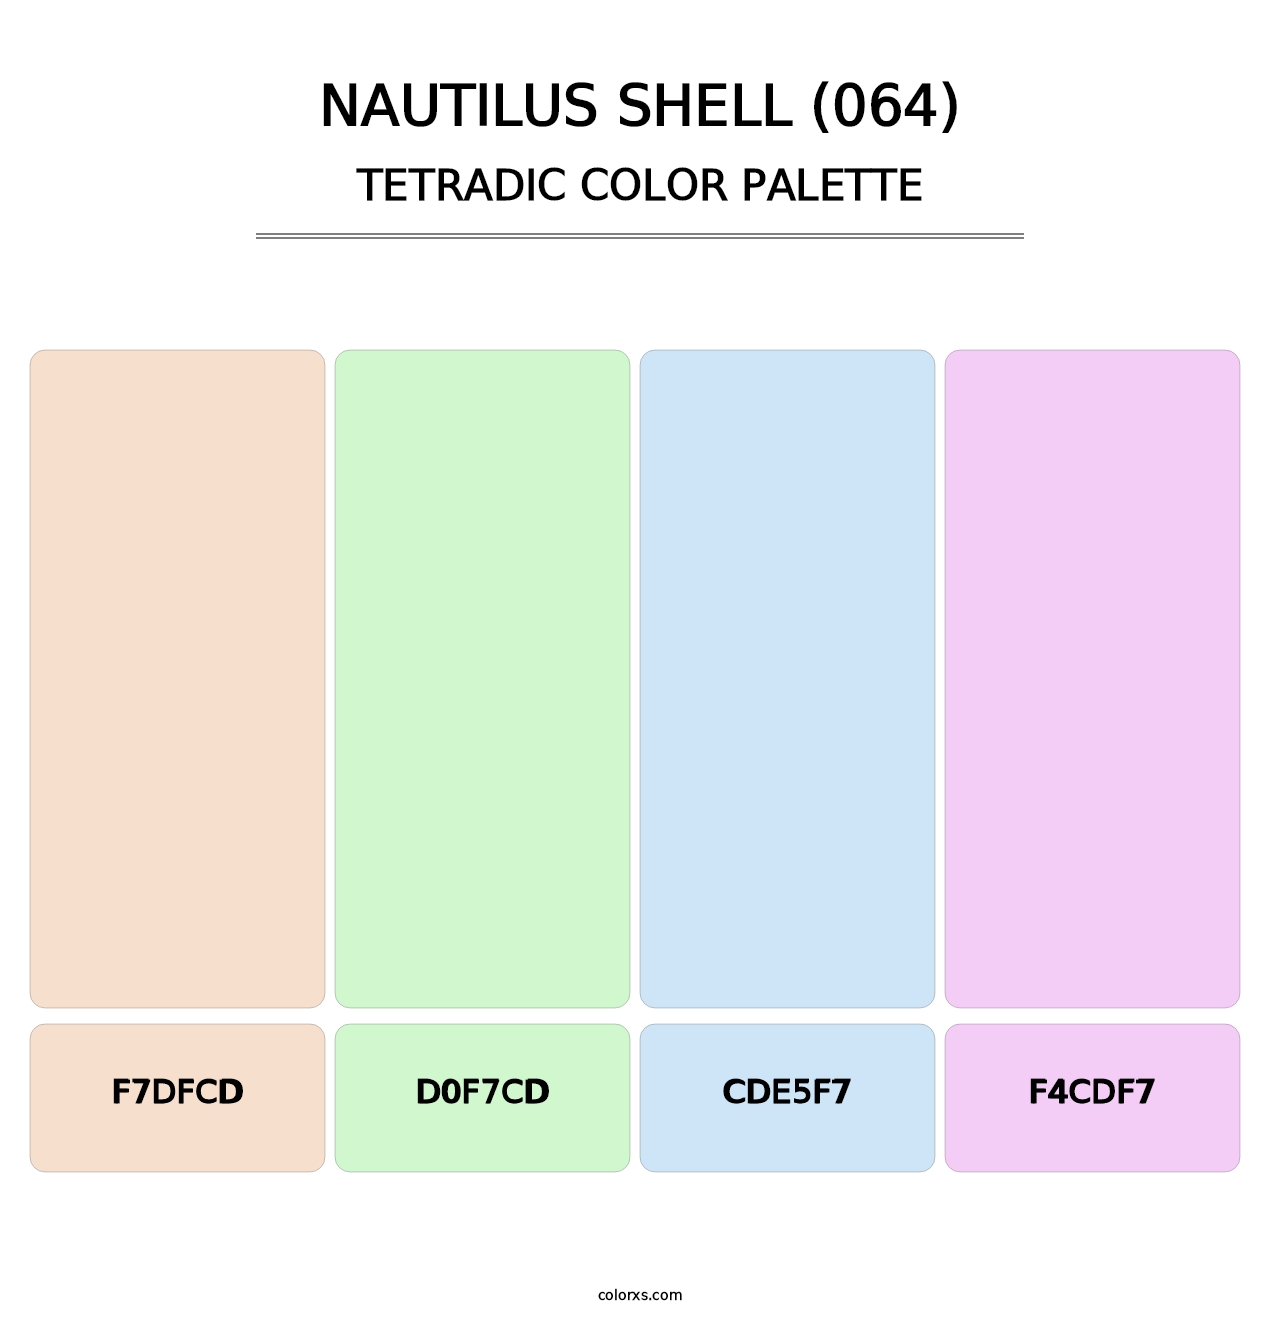 Nautilus Shell (064) - Tetradic Color Palette